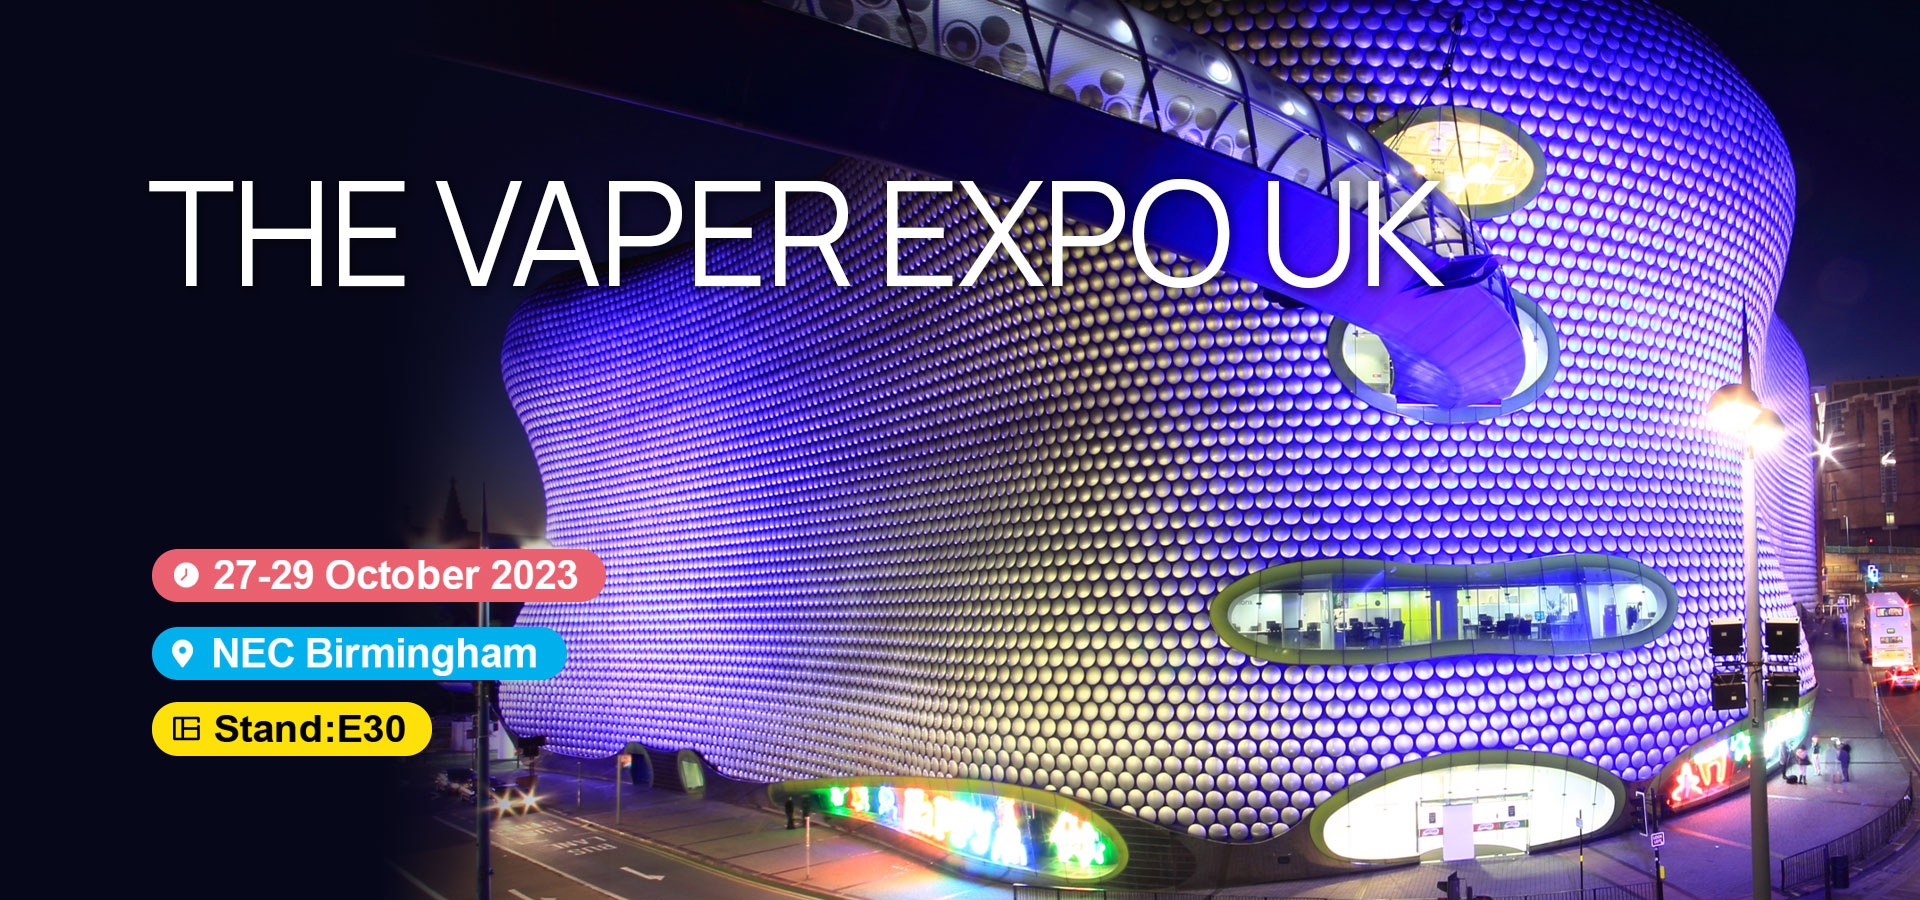 October 27th-29th, The Vaper Expo UK, Enjoy vaping with DRAGBAR!插图